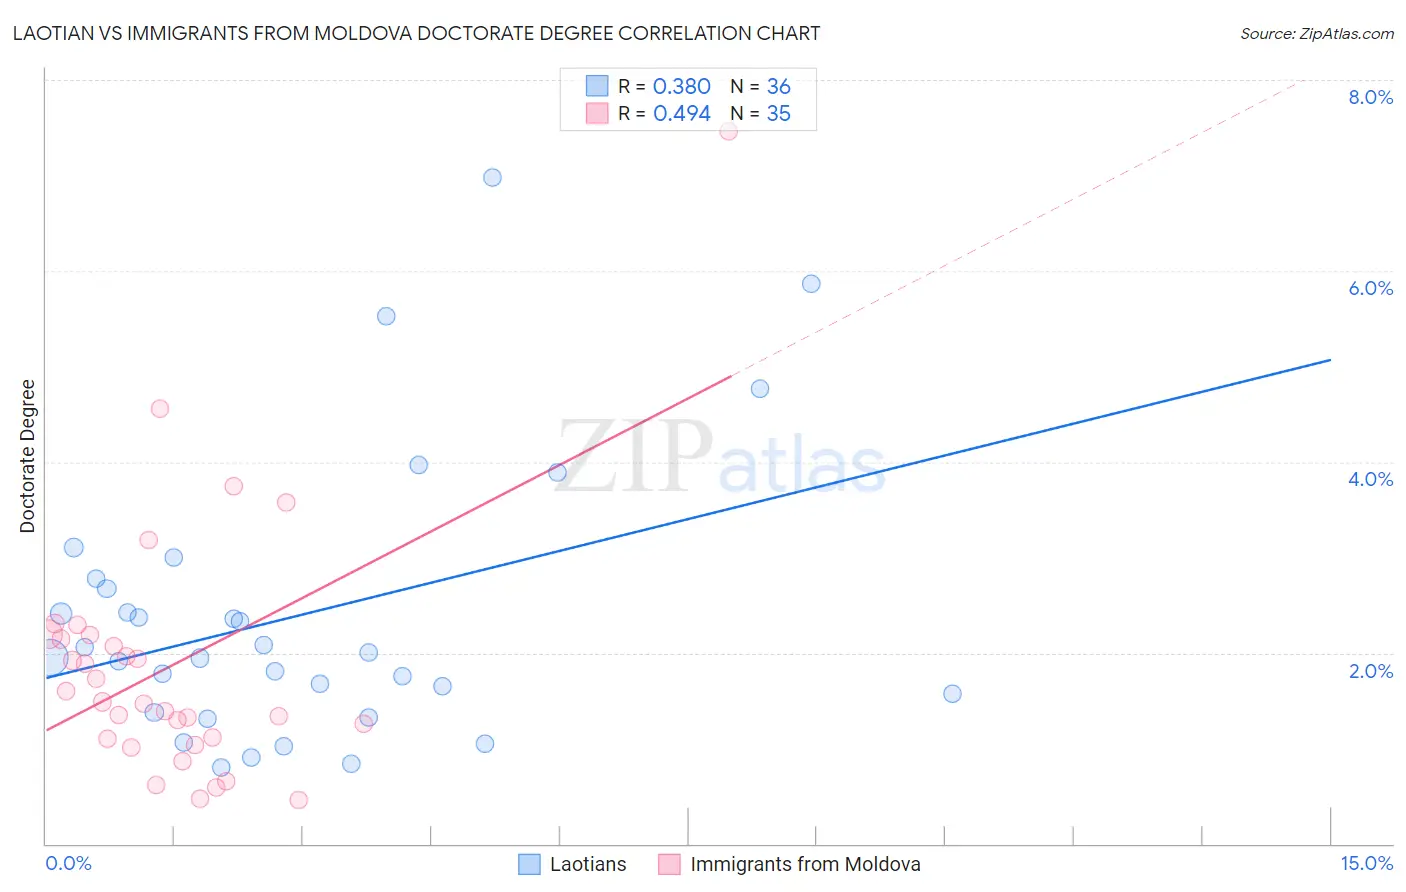 Laotian vs Immigrants from Moldova Doctorate Degree